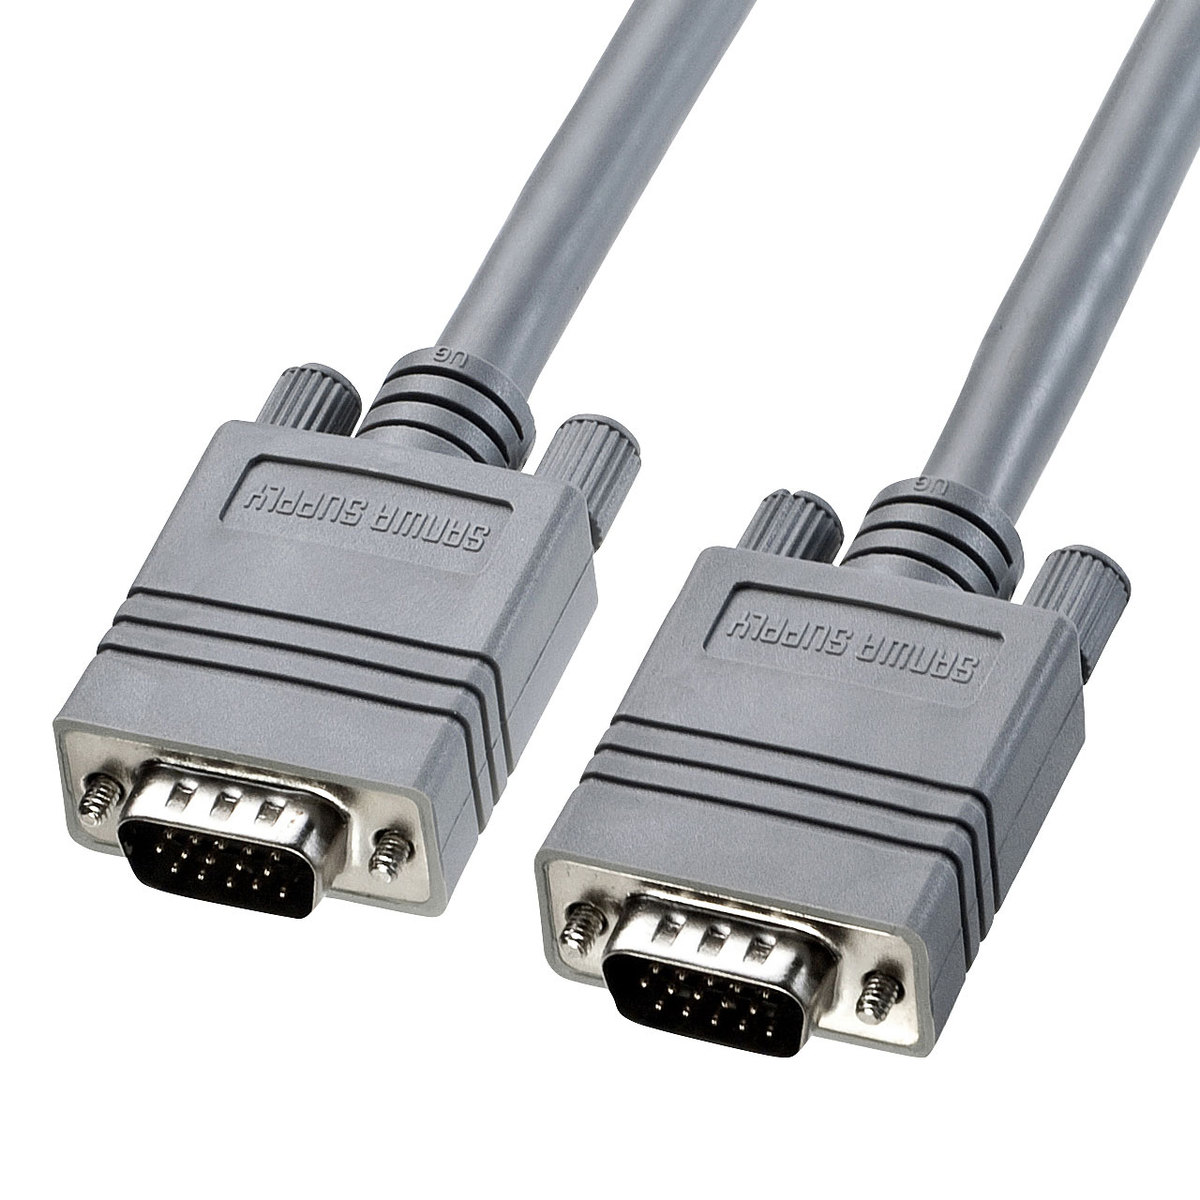 Display Cable (Compound Coaxial / Analog RGB), KB-CHD Series (KB-CHD157K2) 